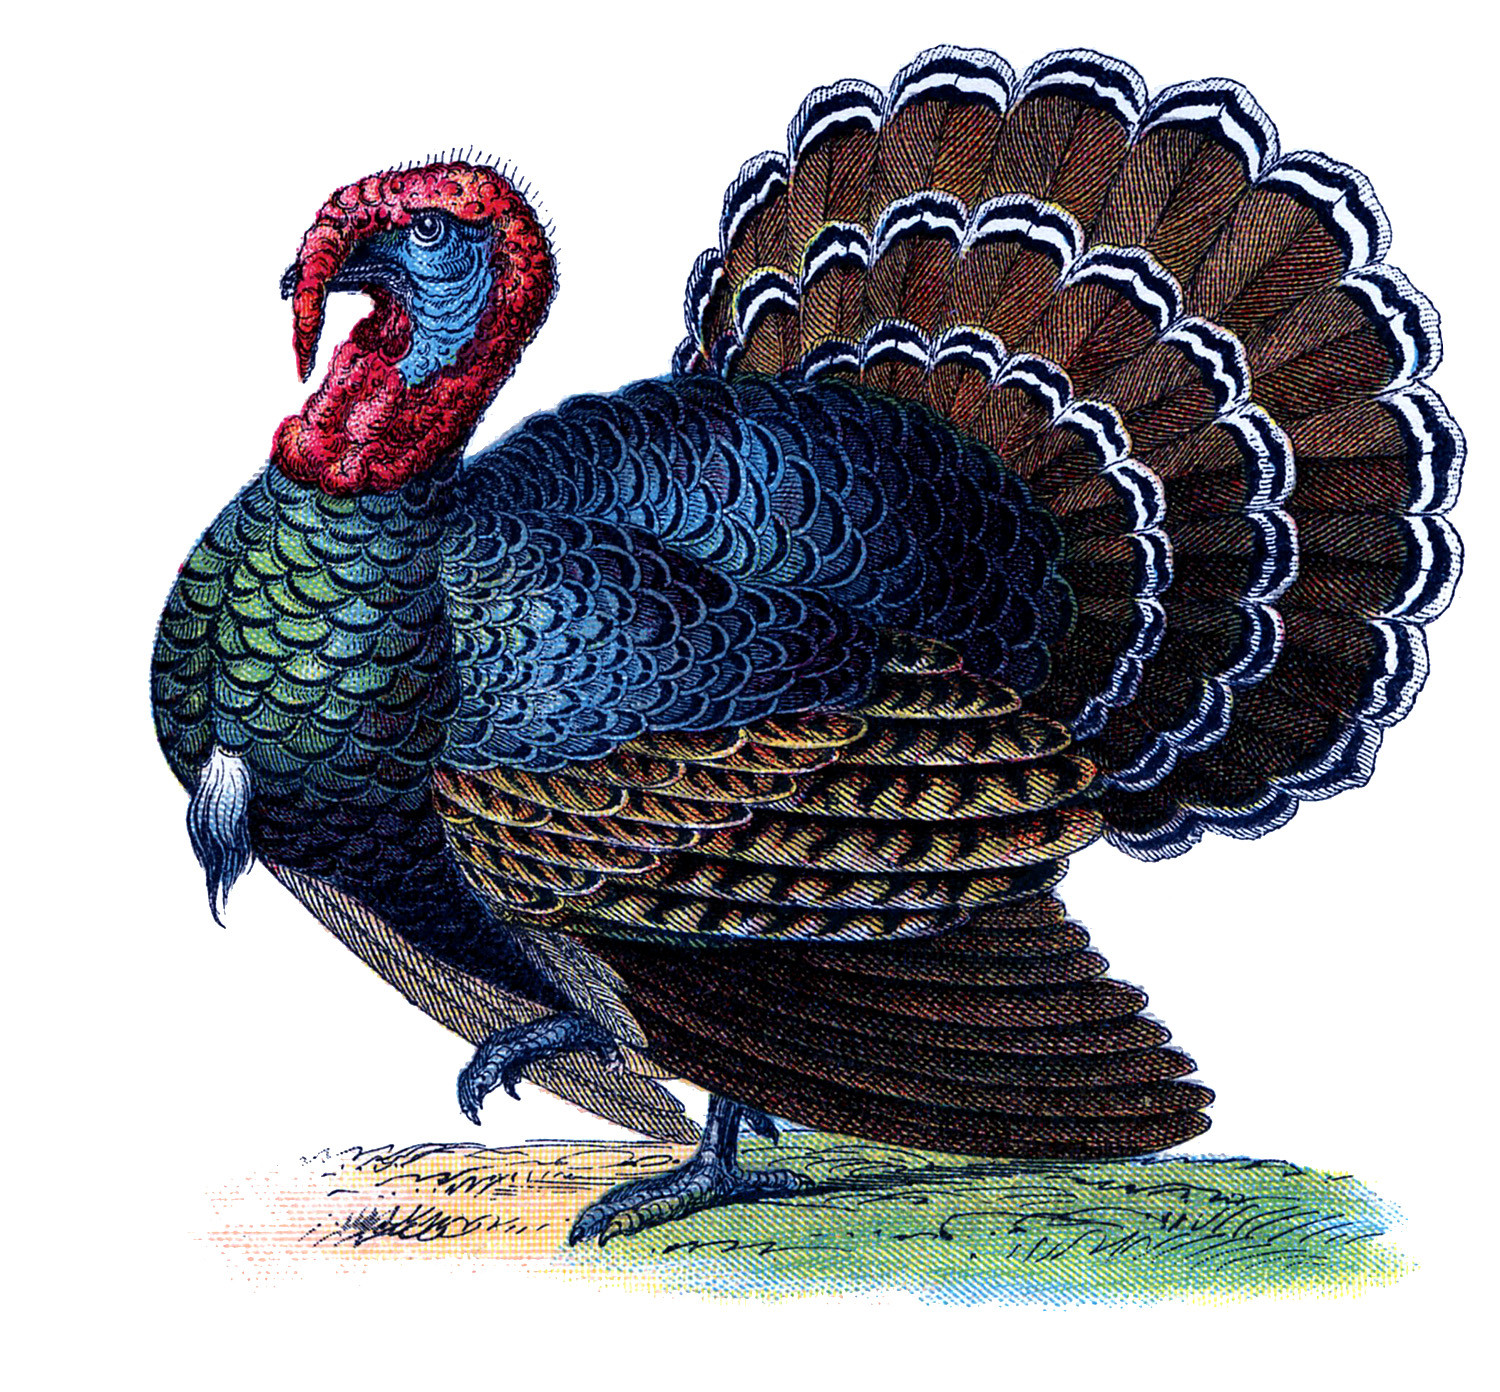 Images Of Thanksgiving Turkey
 Vintage Thanksgiving Image Gorgeous Turkey The